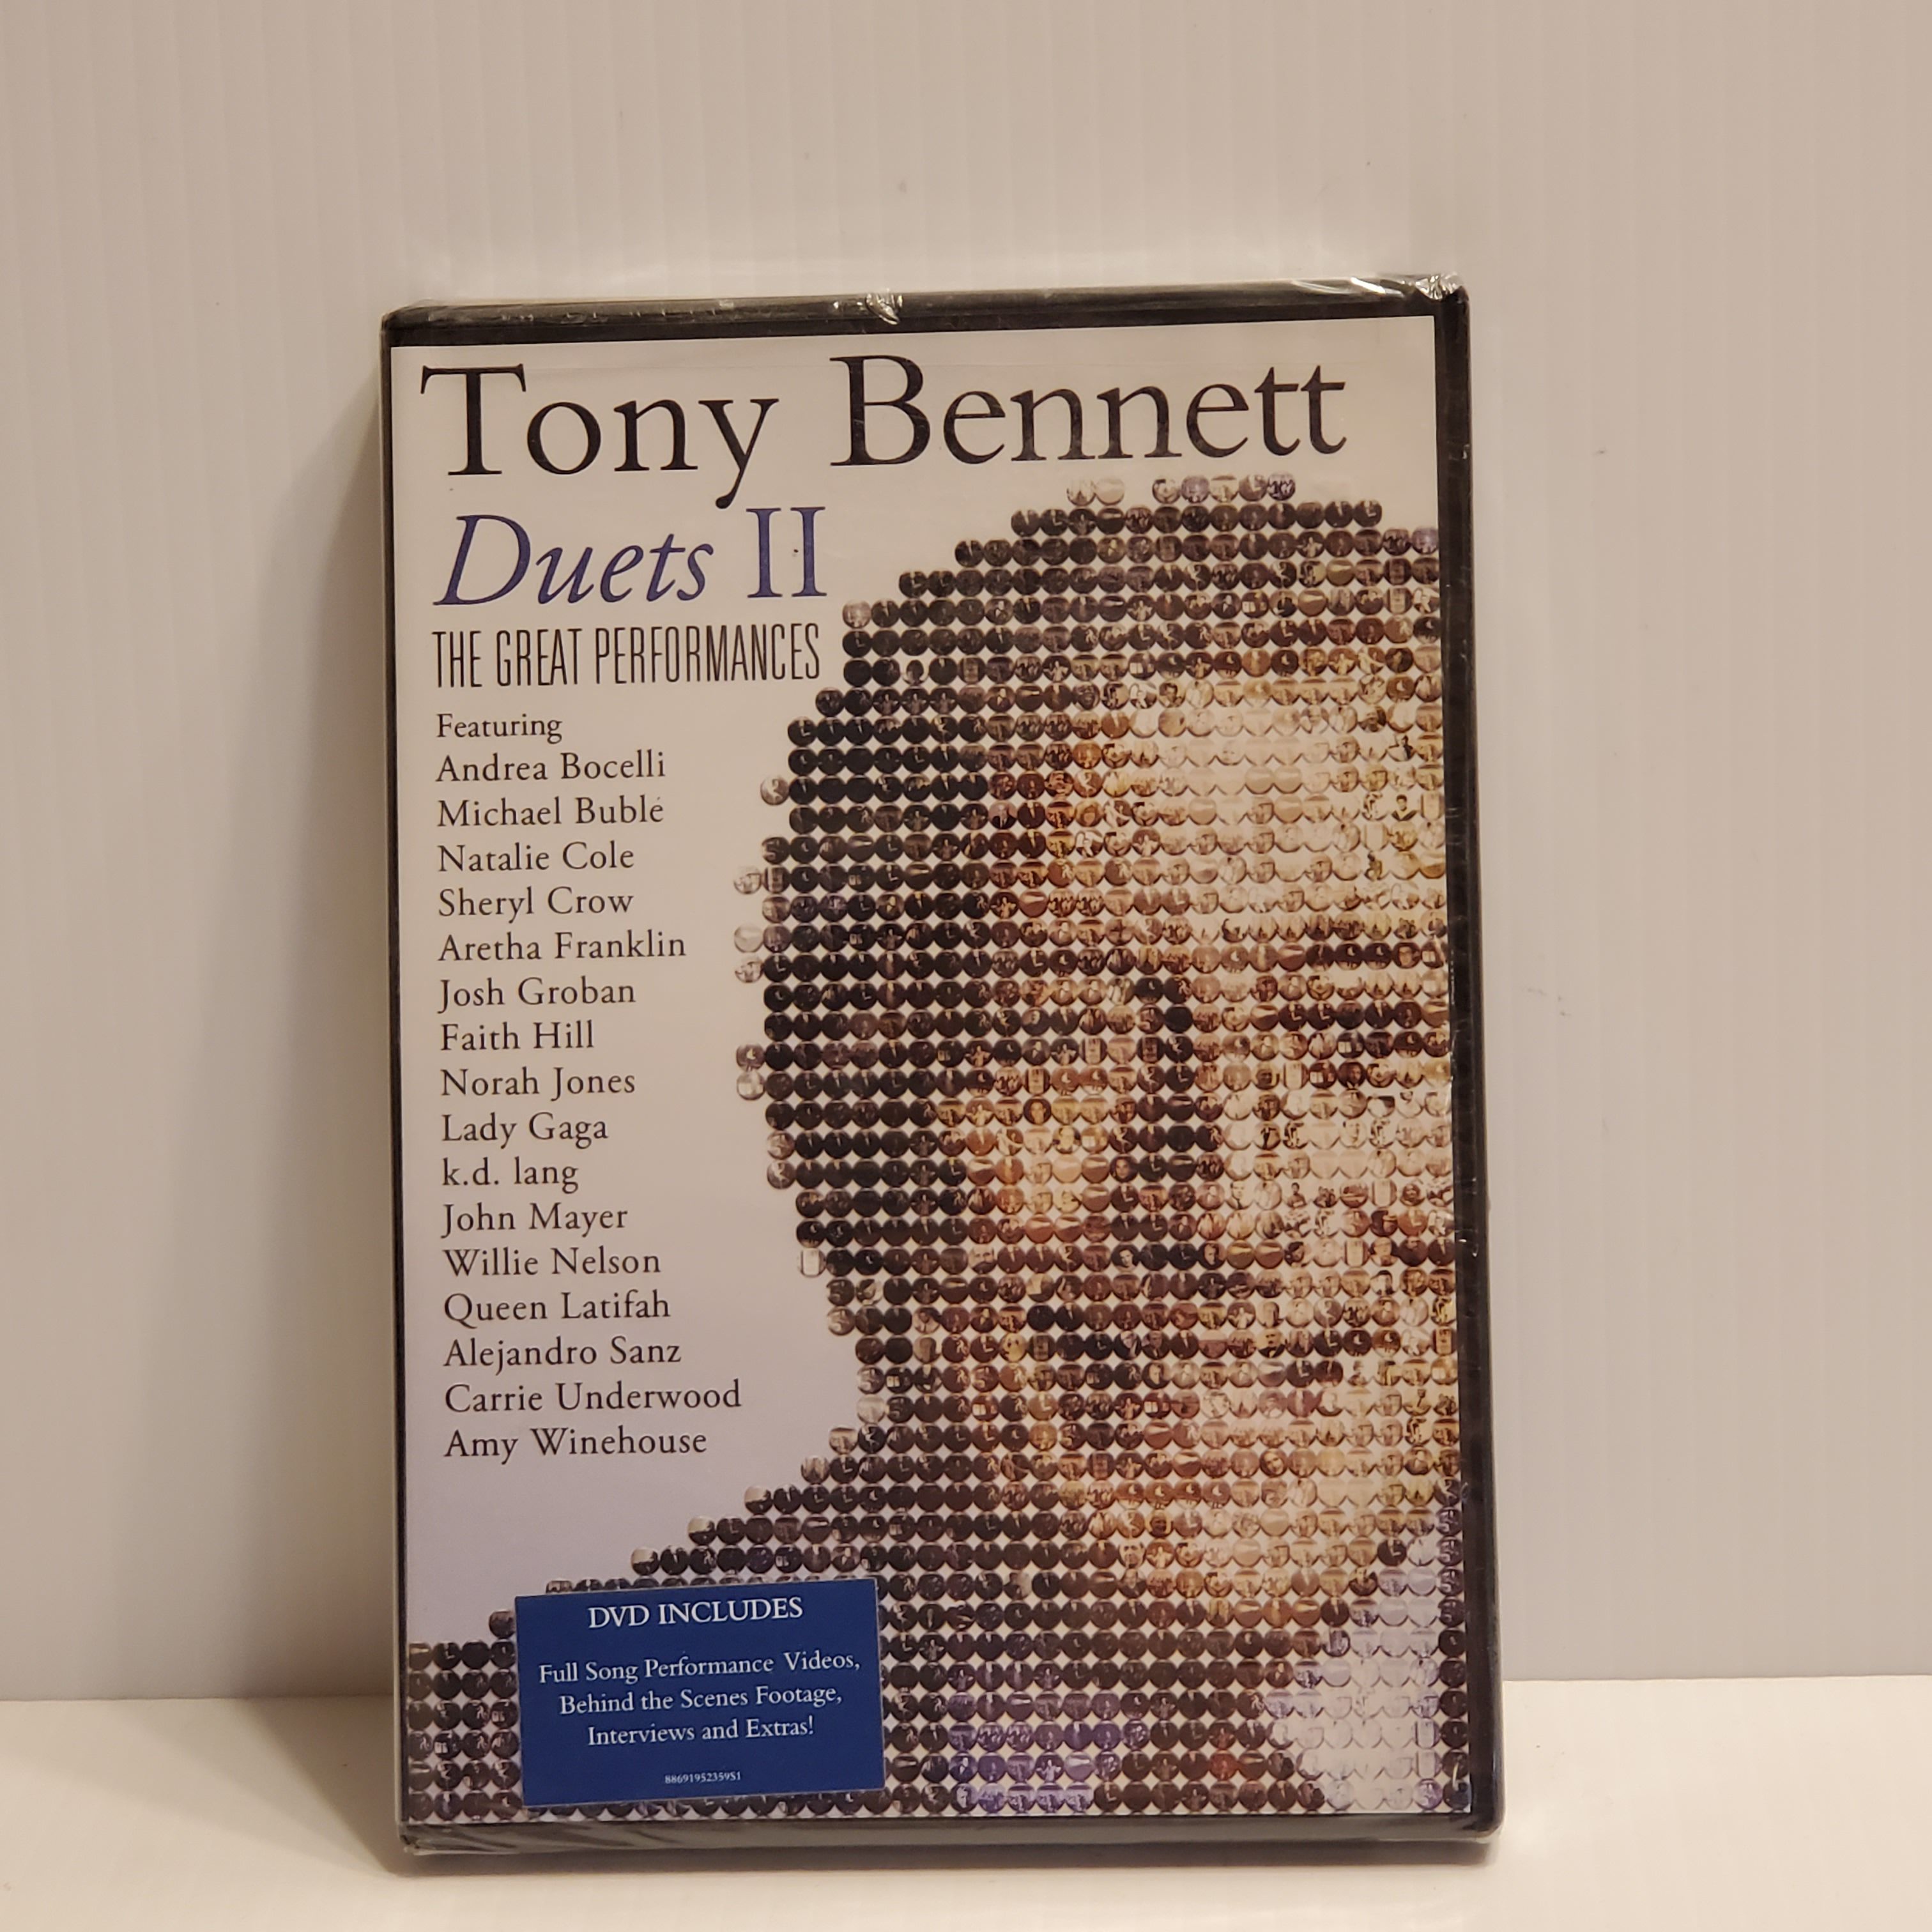 Tony Bennett Duets II - The Great Performances New sealed